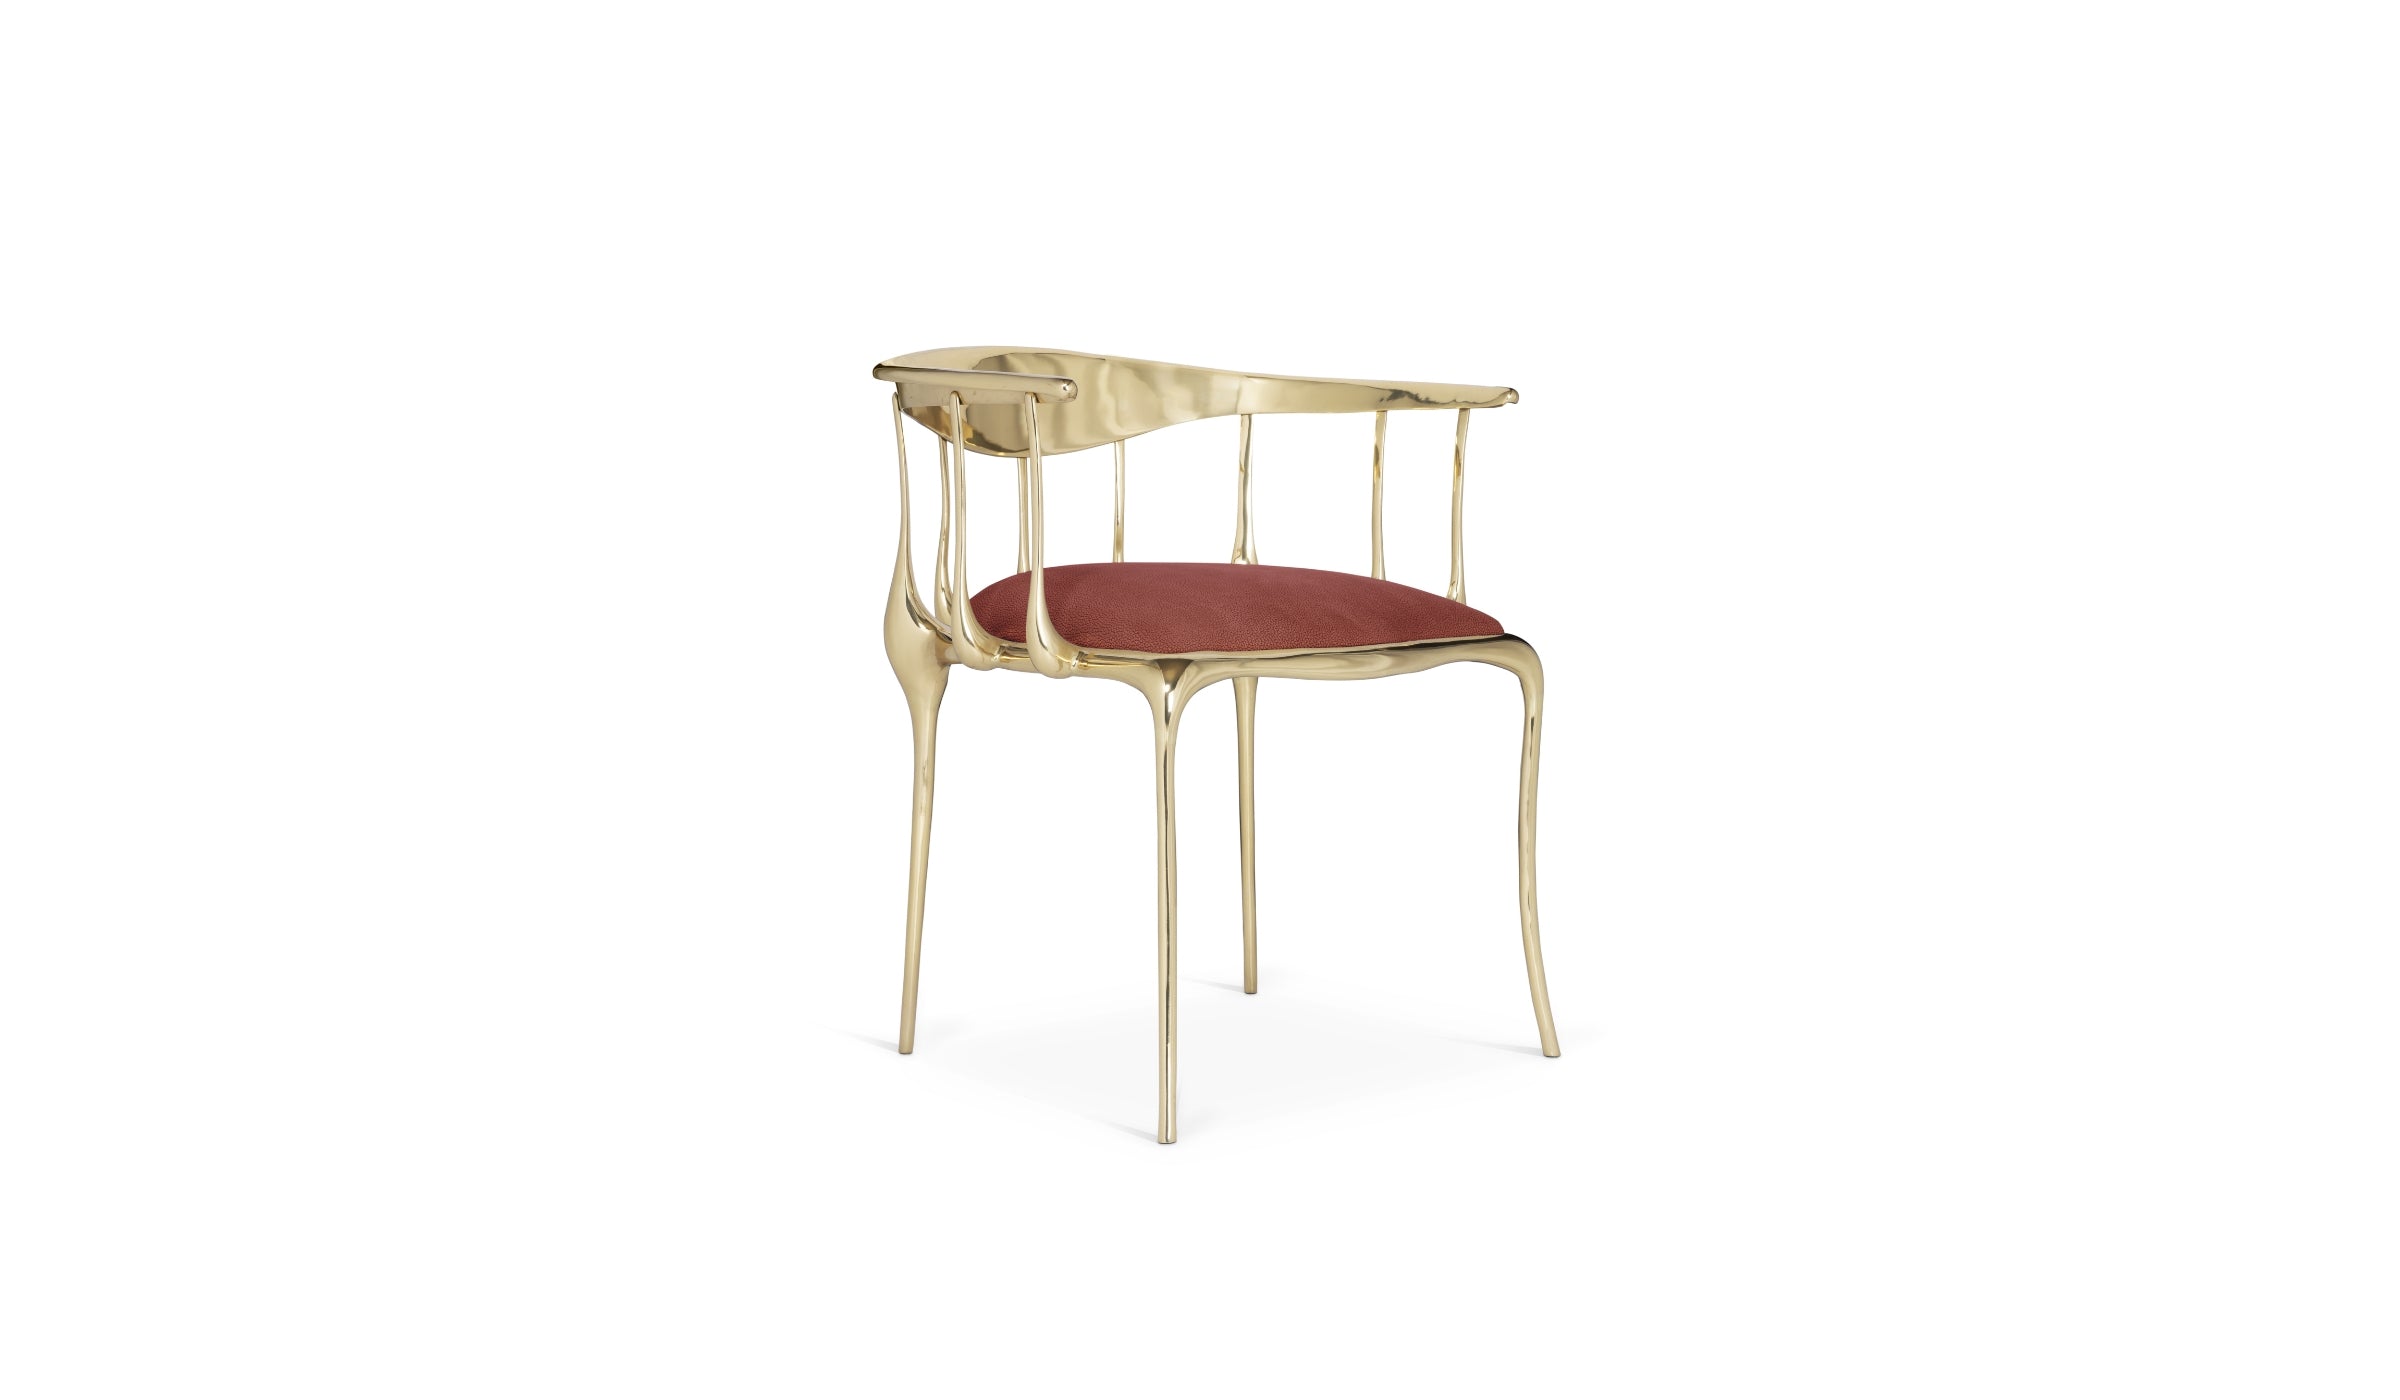 N°11 - Surrealist design chair in golden brass and burgundy velvet